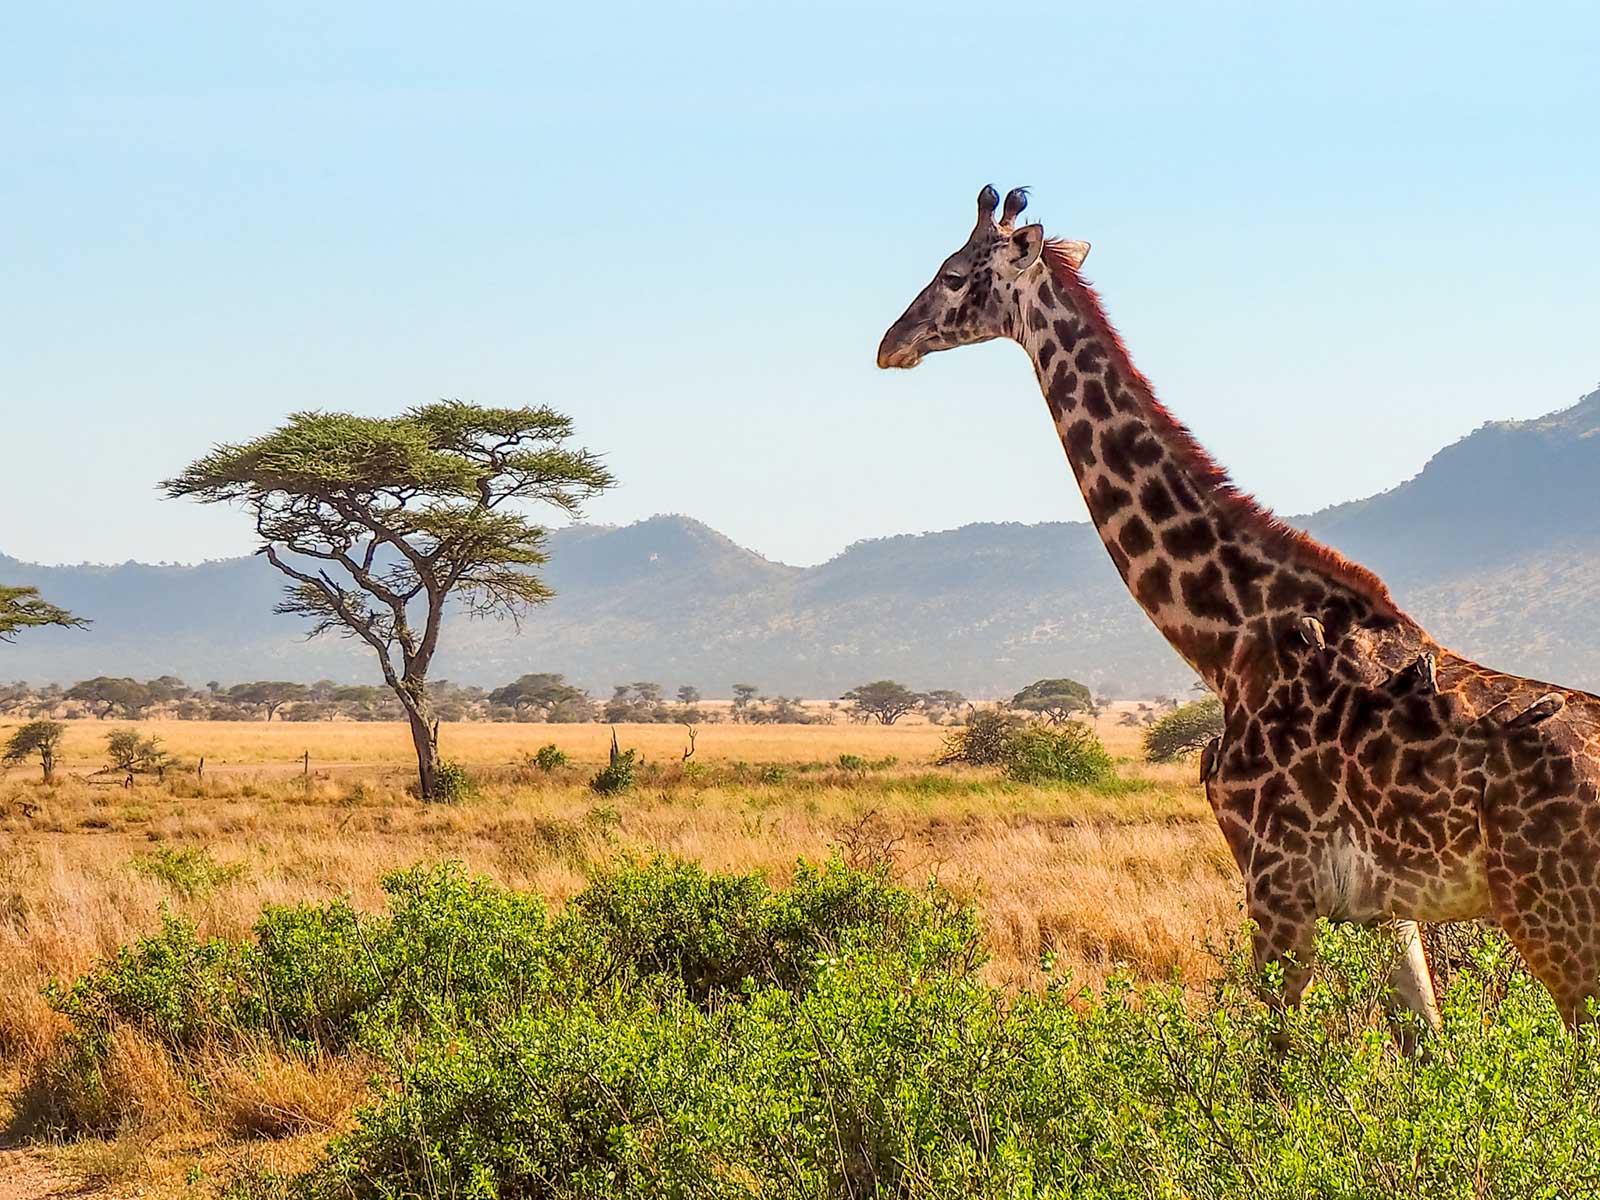 A giraffe in Serengeti National Park